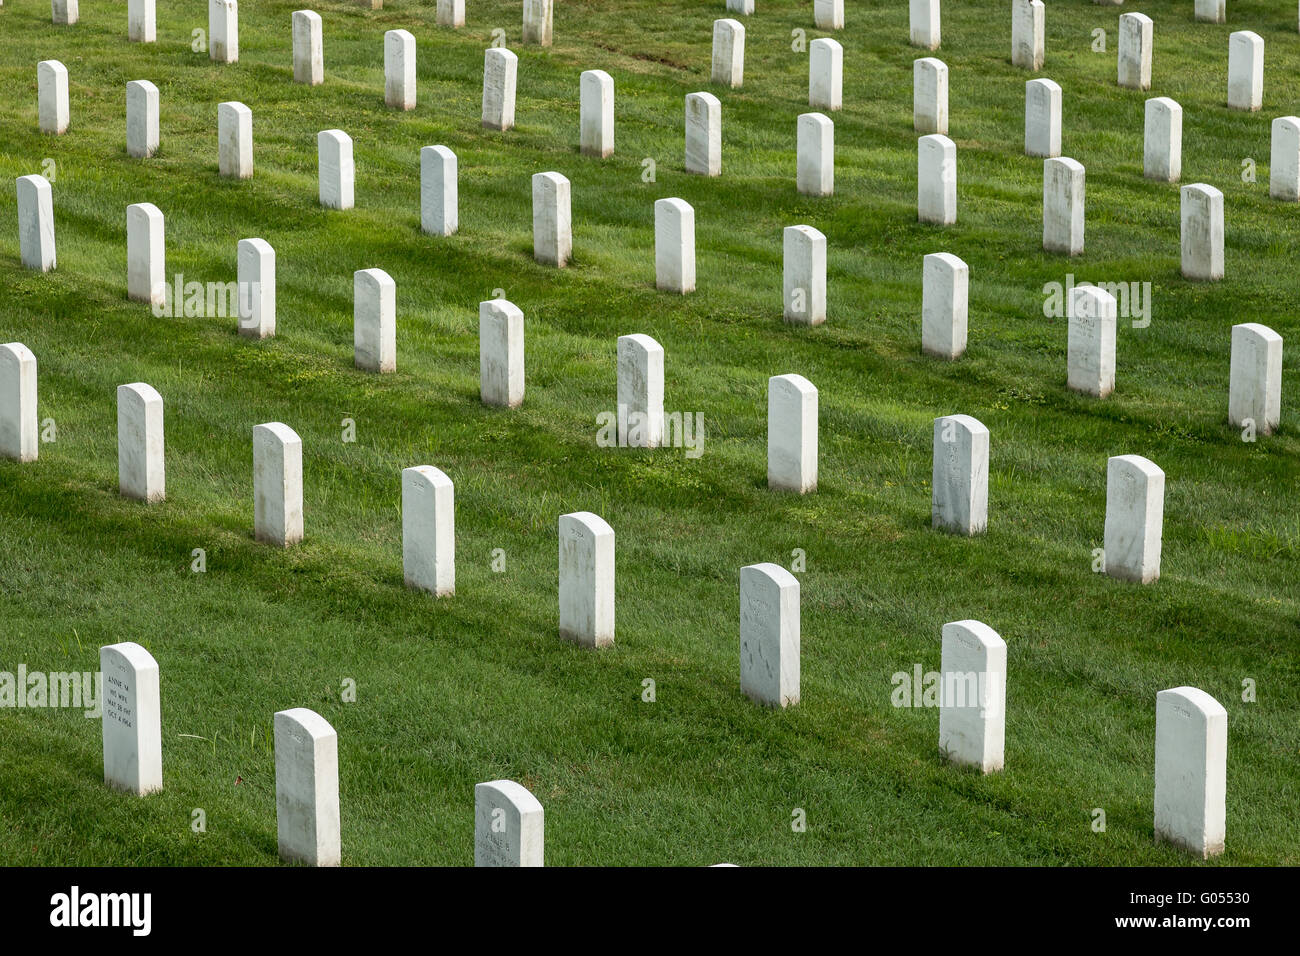 Rows of white headstones marking graves in Arlington National Cemetery, near Washington DC. Stock Photo